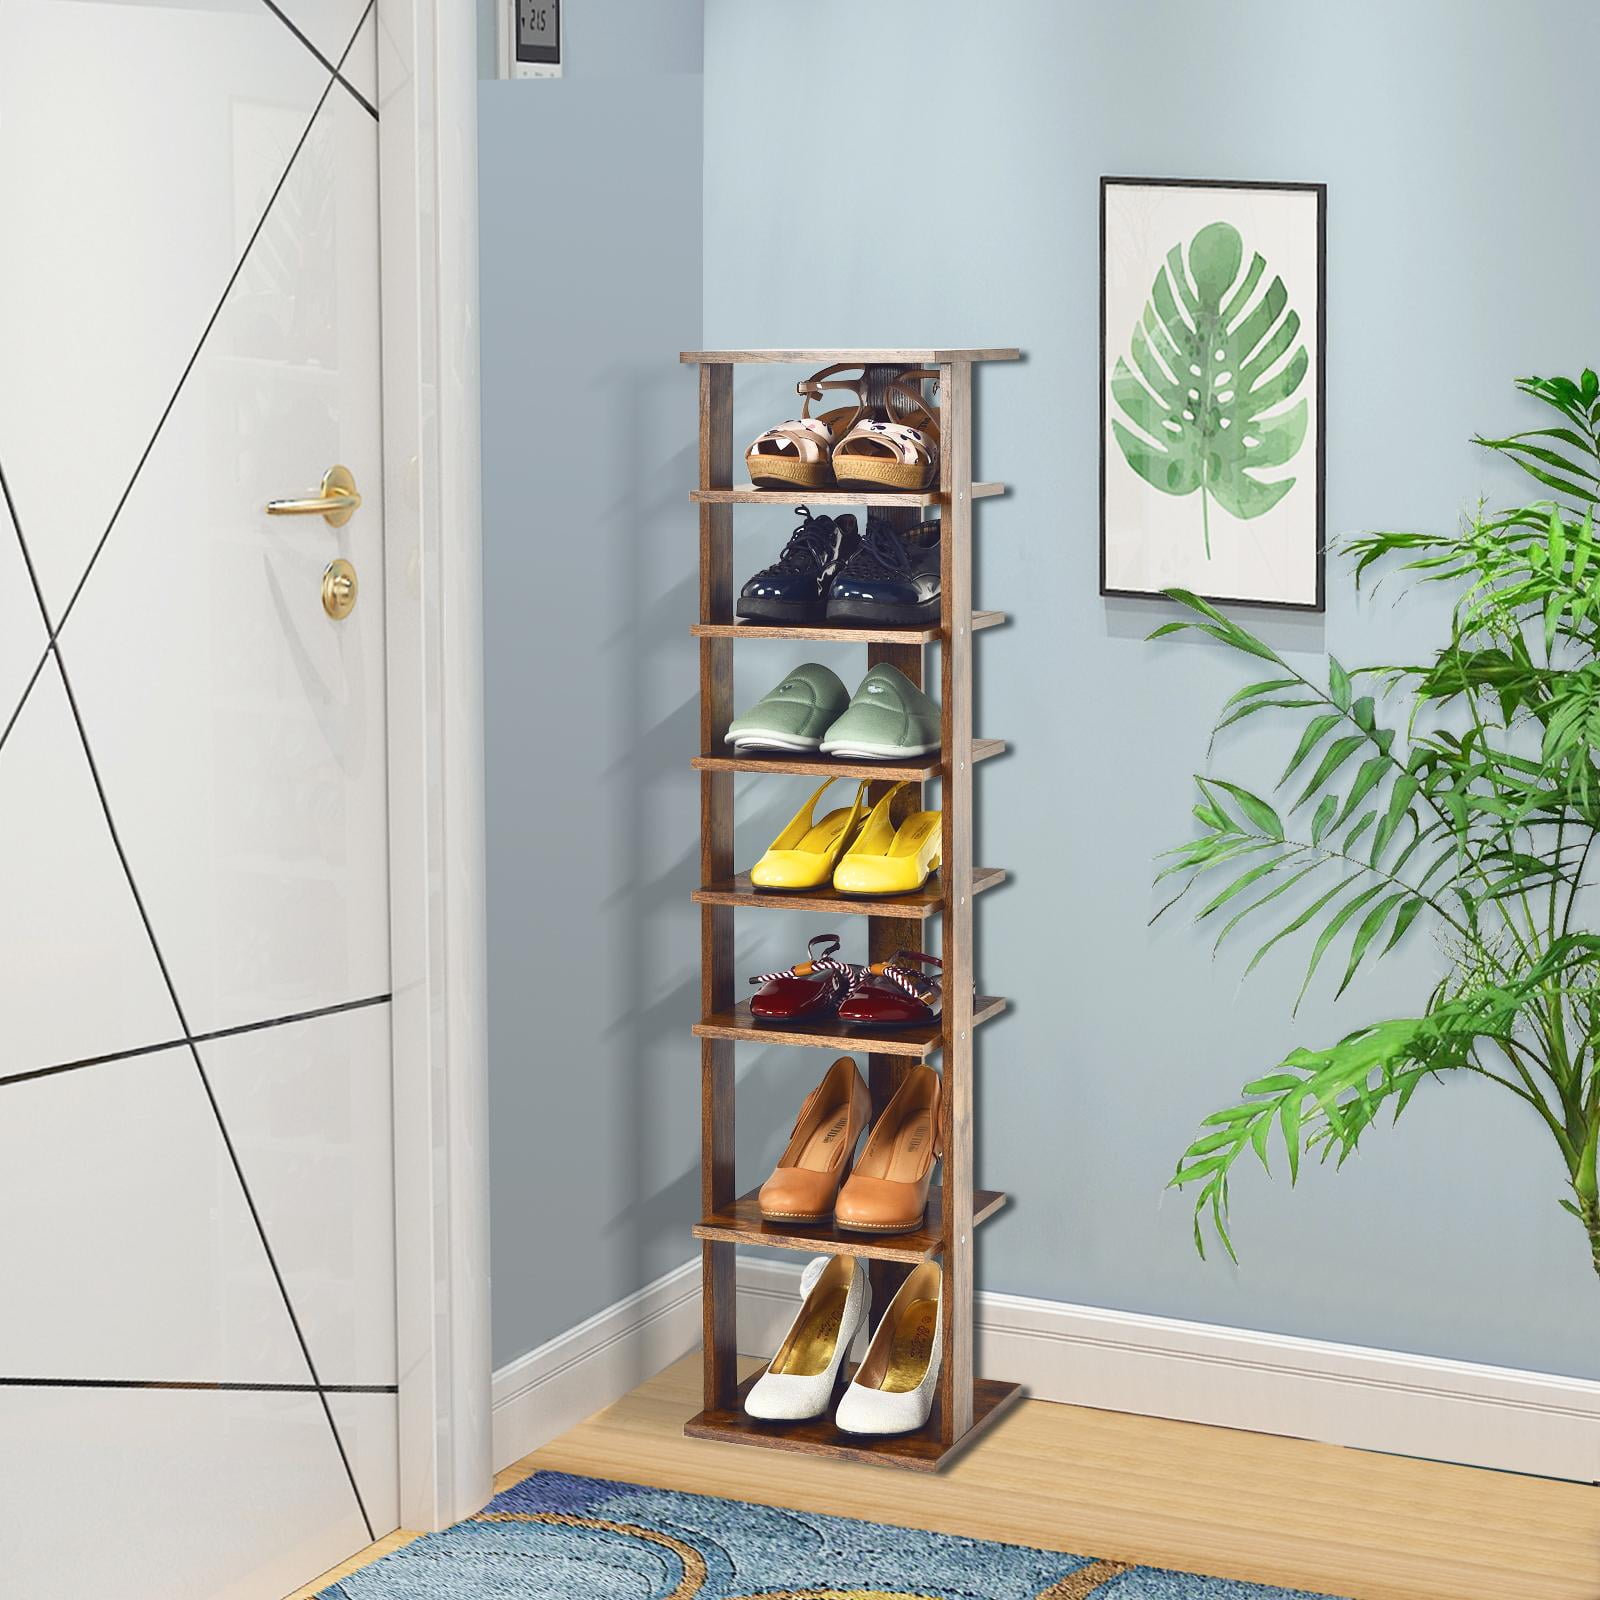 MIAOZHANG Shoe Racks Storage Wooden Tall Narrow Slim Shoe Cabinet Organiser  Cupboard for Hallway Entryway Small Space Shoe Shelf,Brown,6 Layer